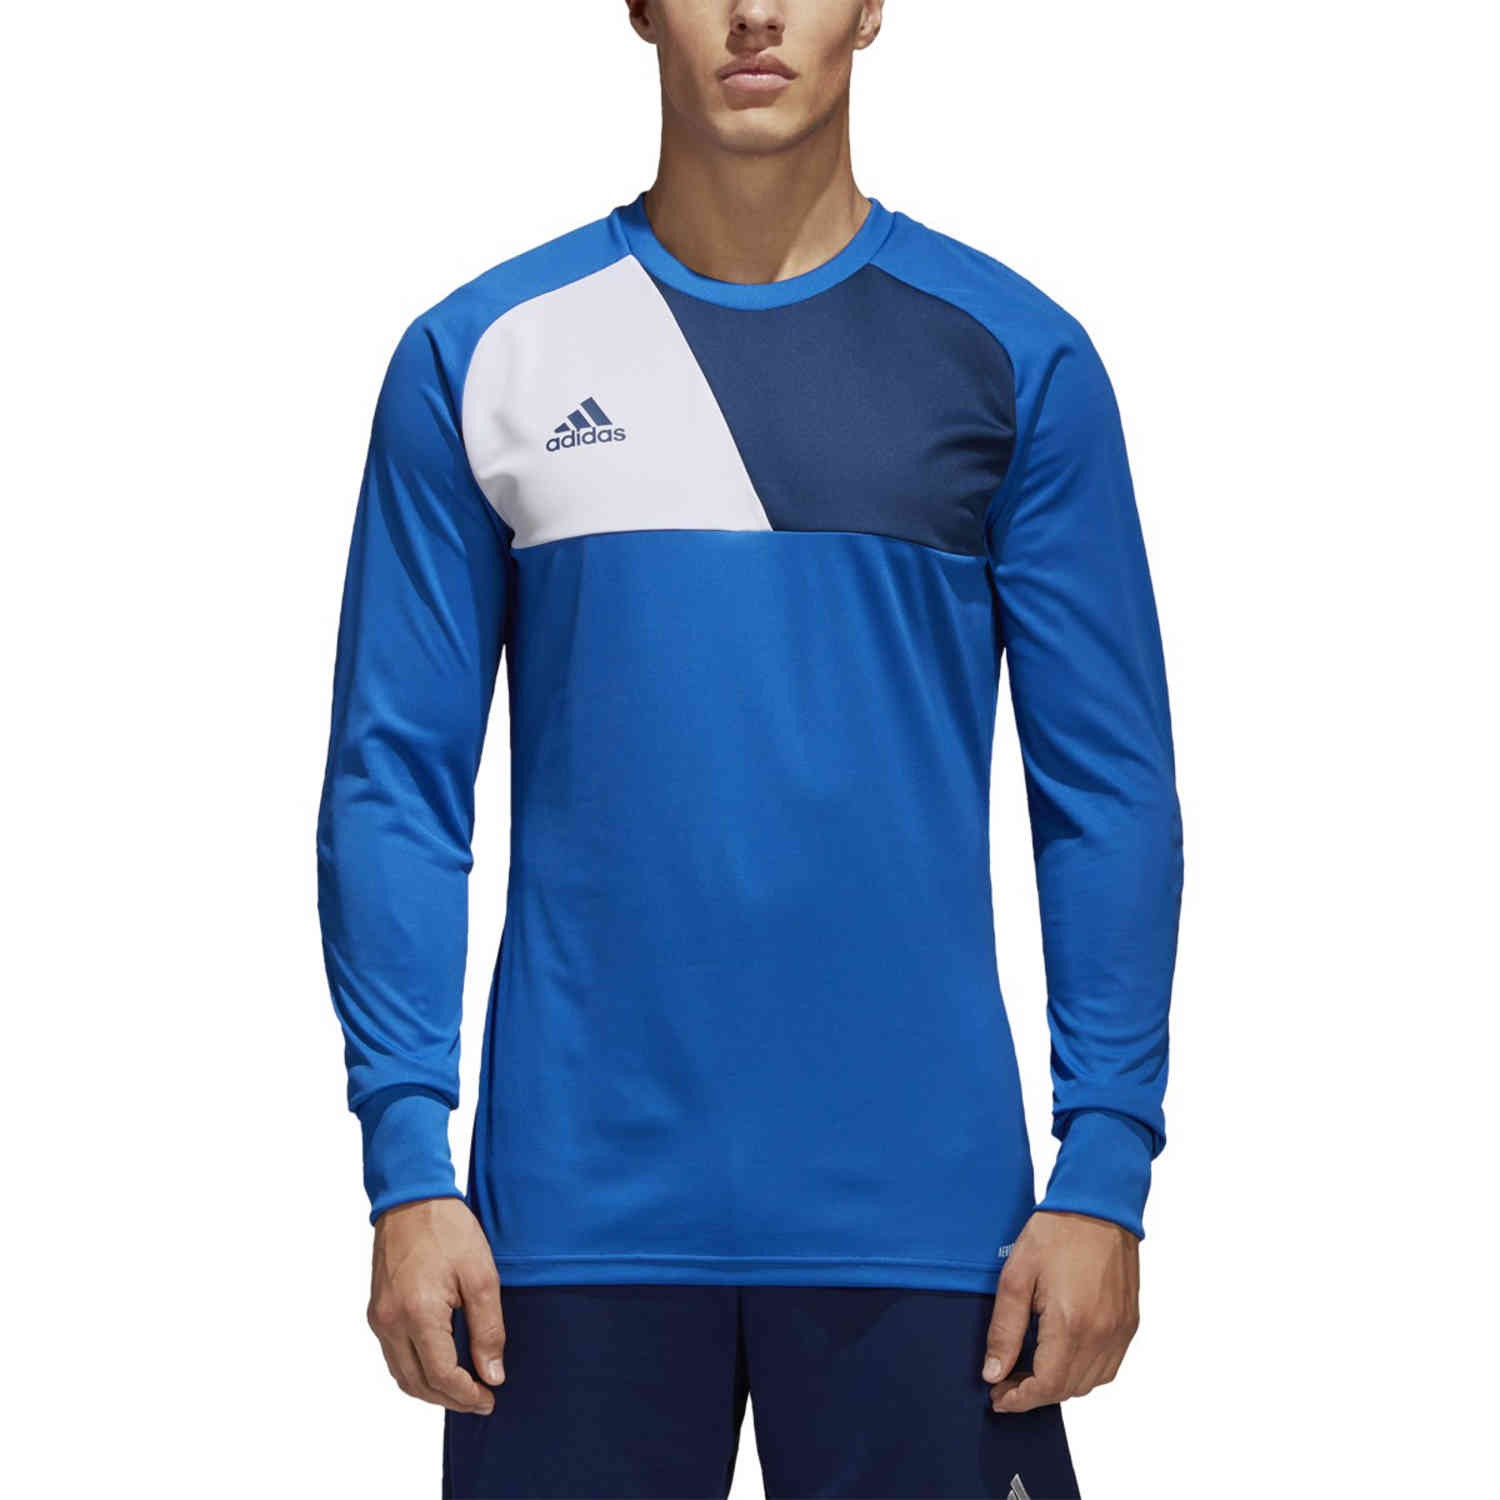 adidas Assita 17 L/S Goalkeeper Jersey - Blue/White - SoccerPro